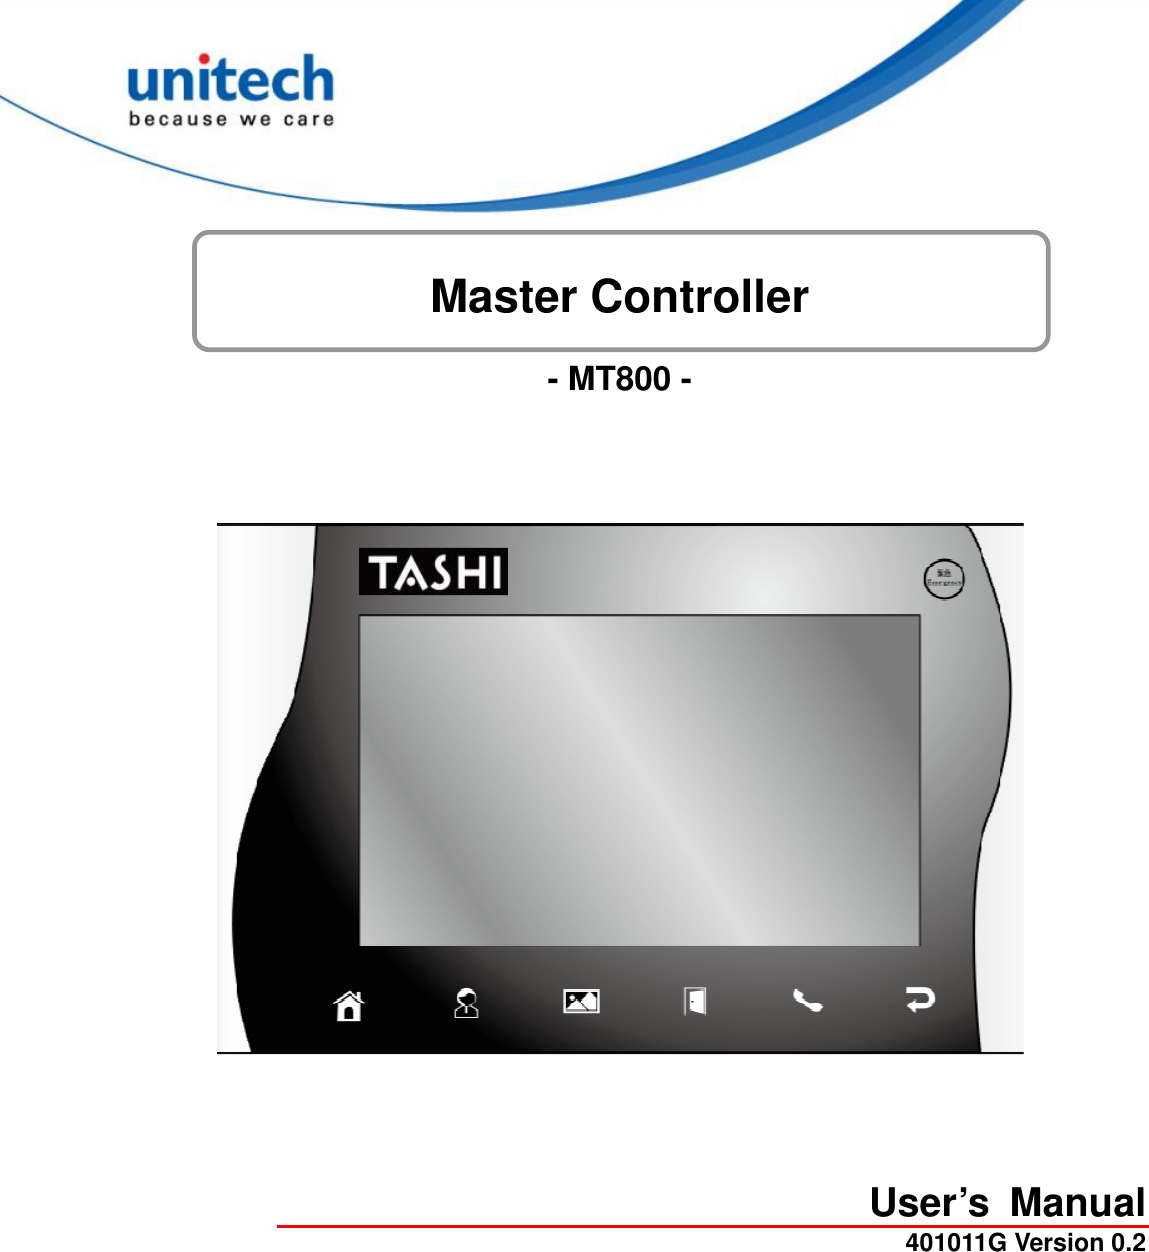    Master Controller - MT800 -  User’s  Manual 401011G Version 0.2  